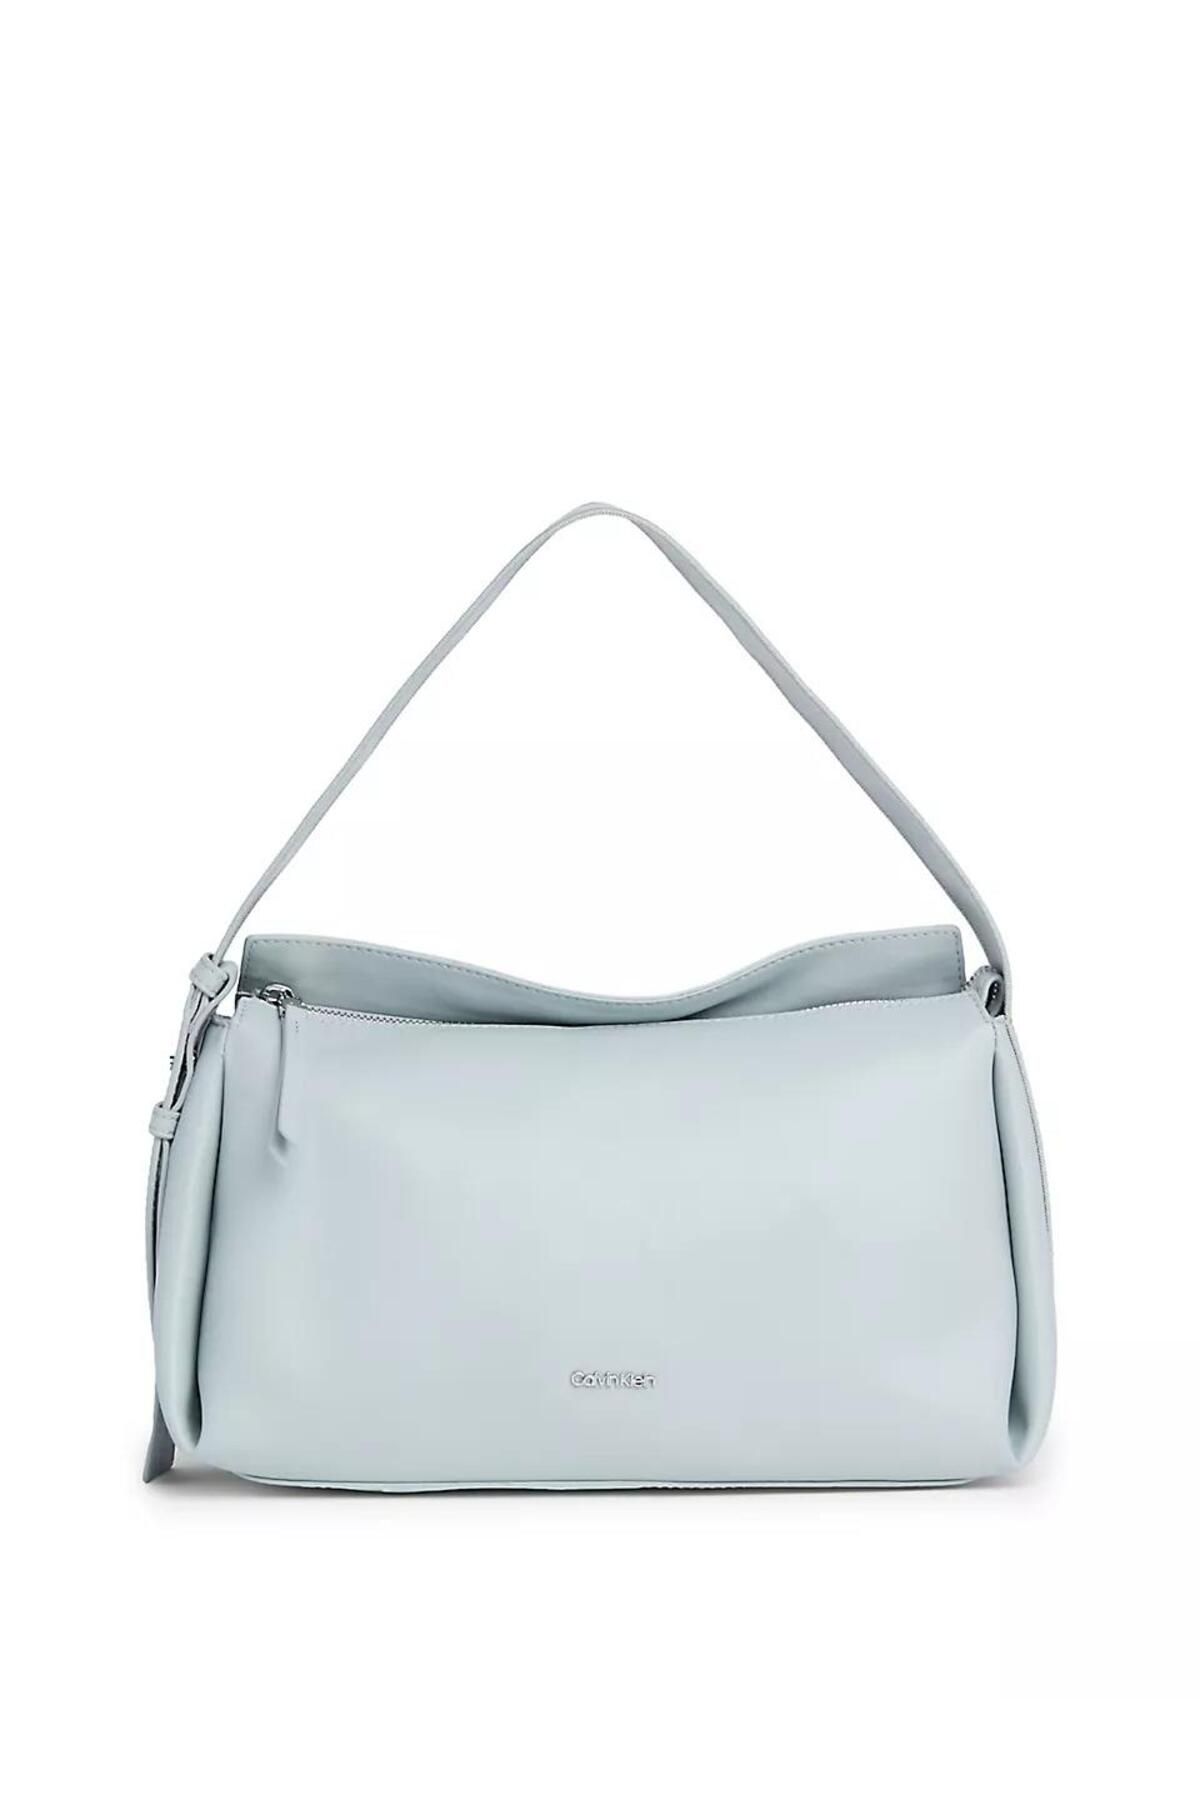 Calvin Klein GRACIE SHOULDER BAG